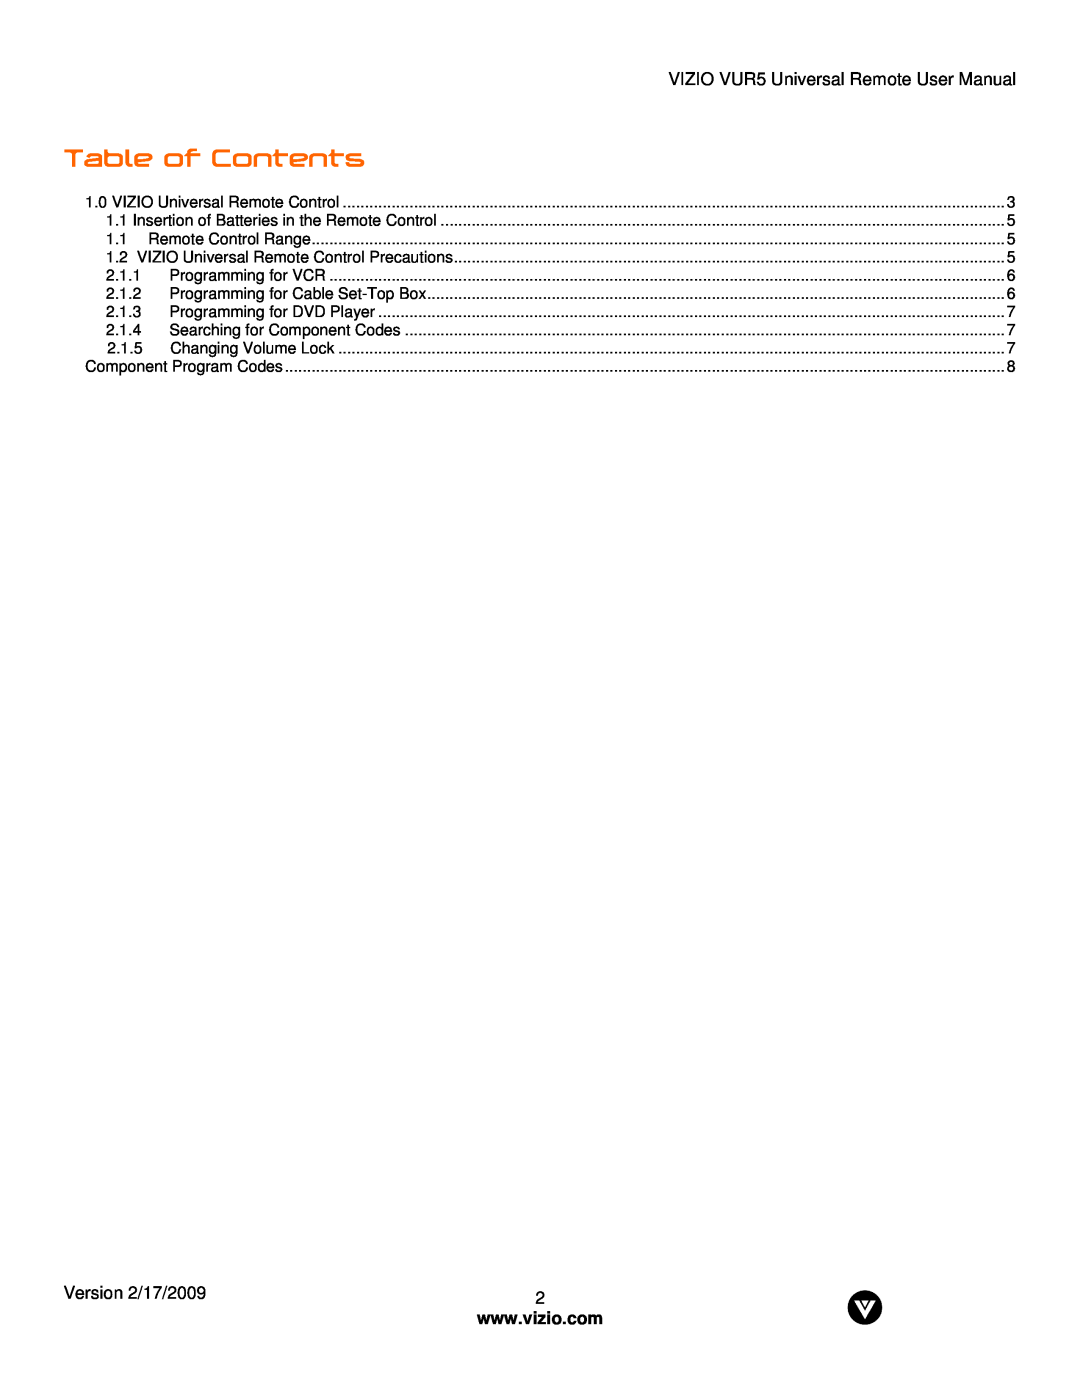 Vizio VUR5 manual Table of Contents, Version 2/17/2009 